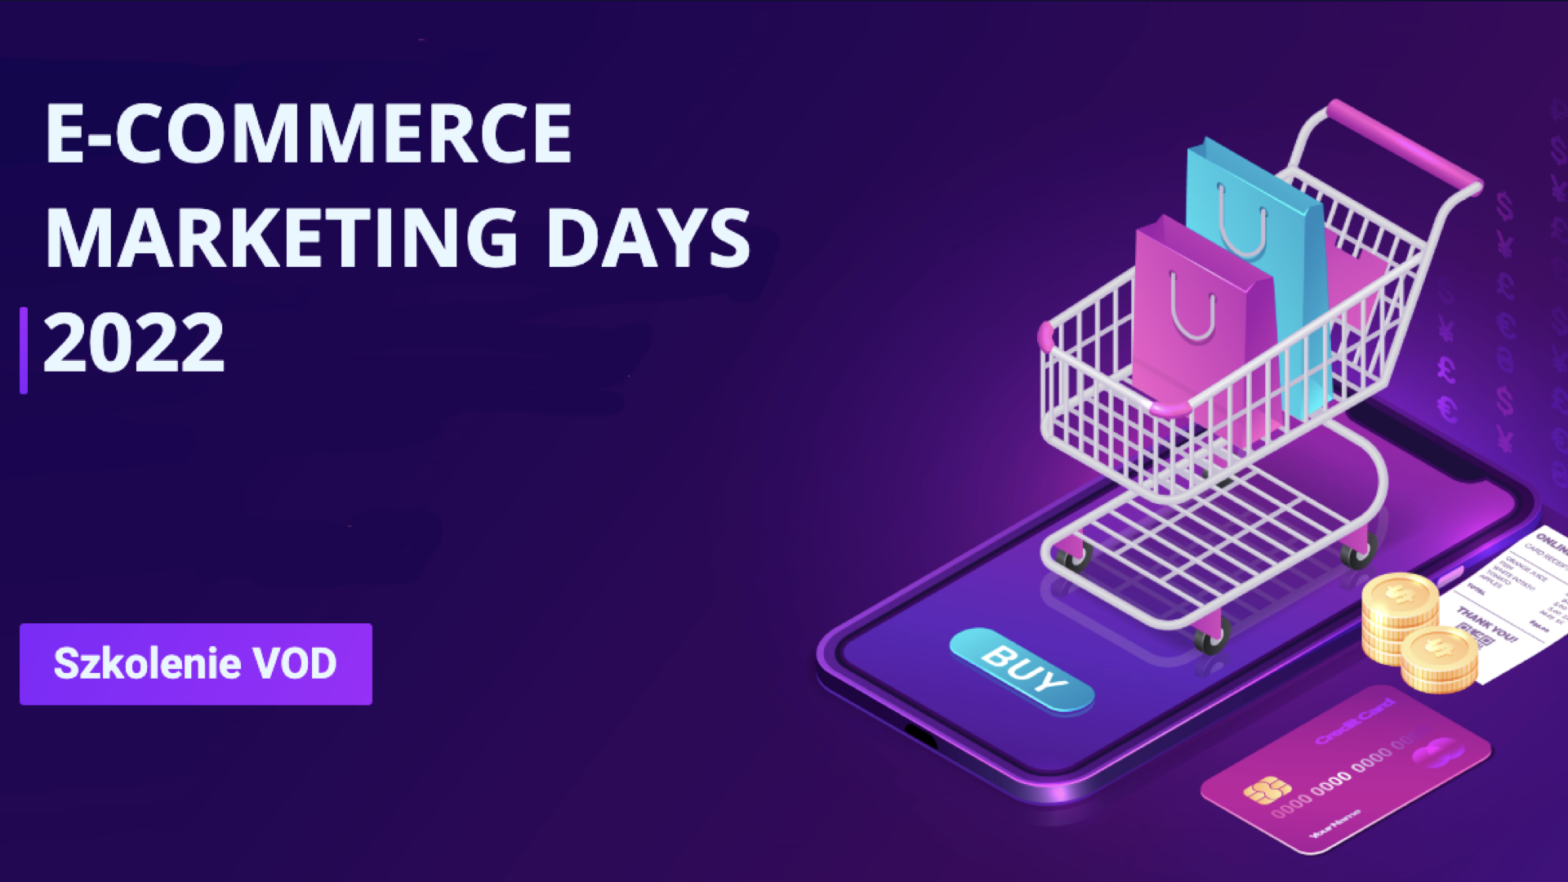 E-commerce marketing days 2022